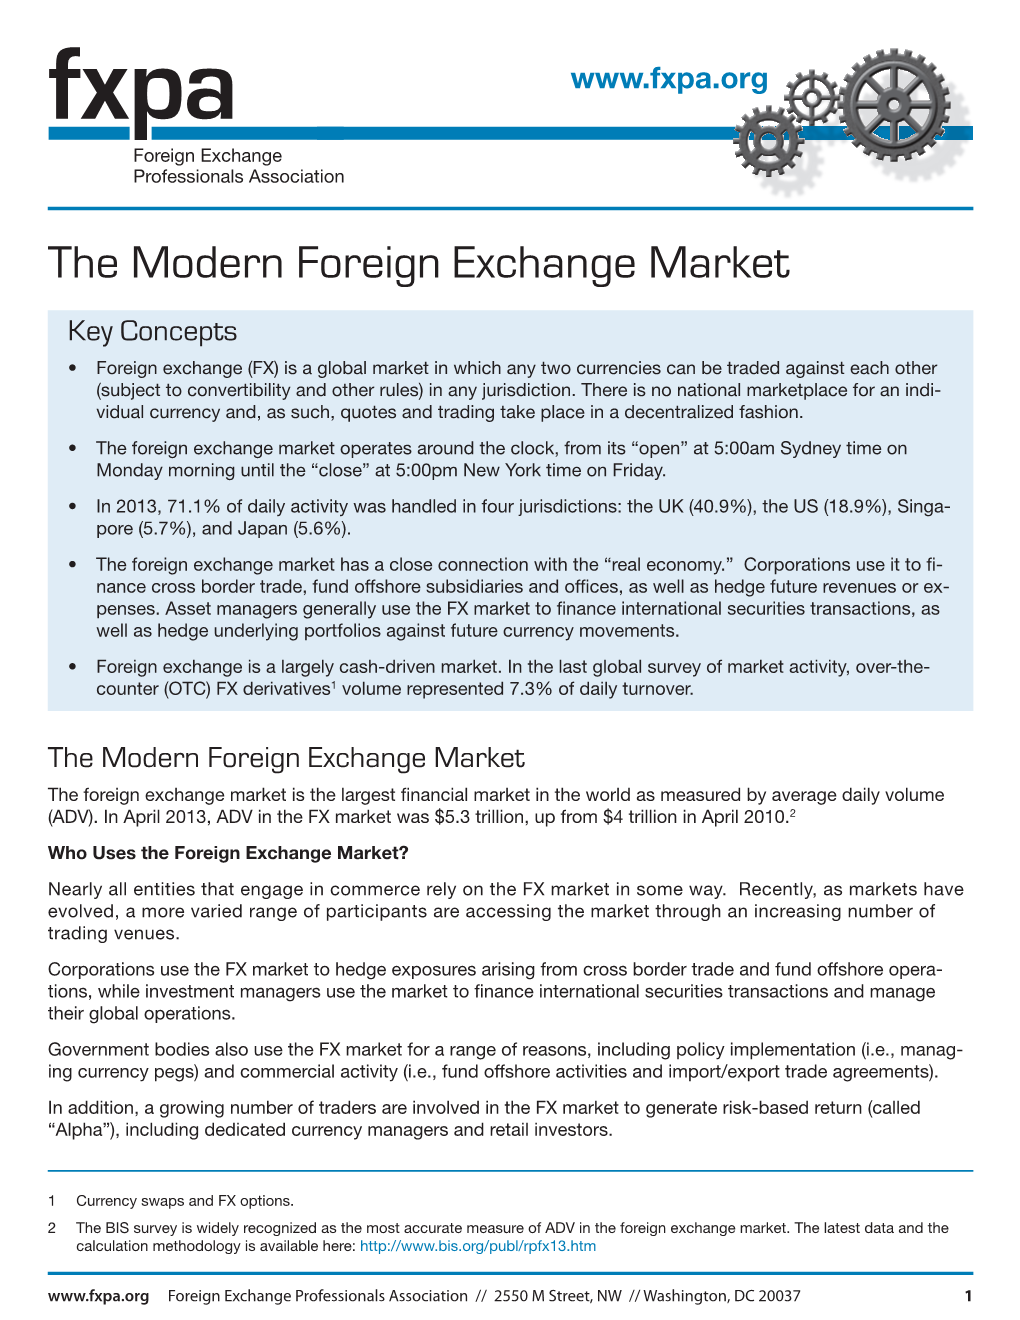 The Modern Foreign Exchange Market